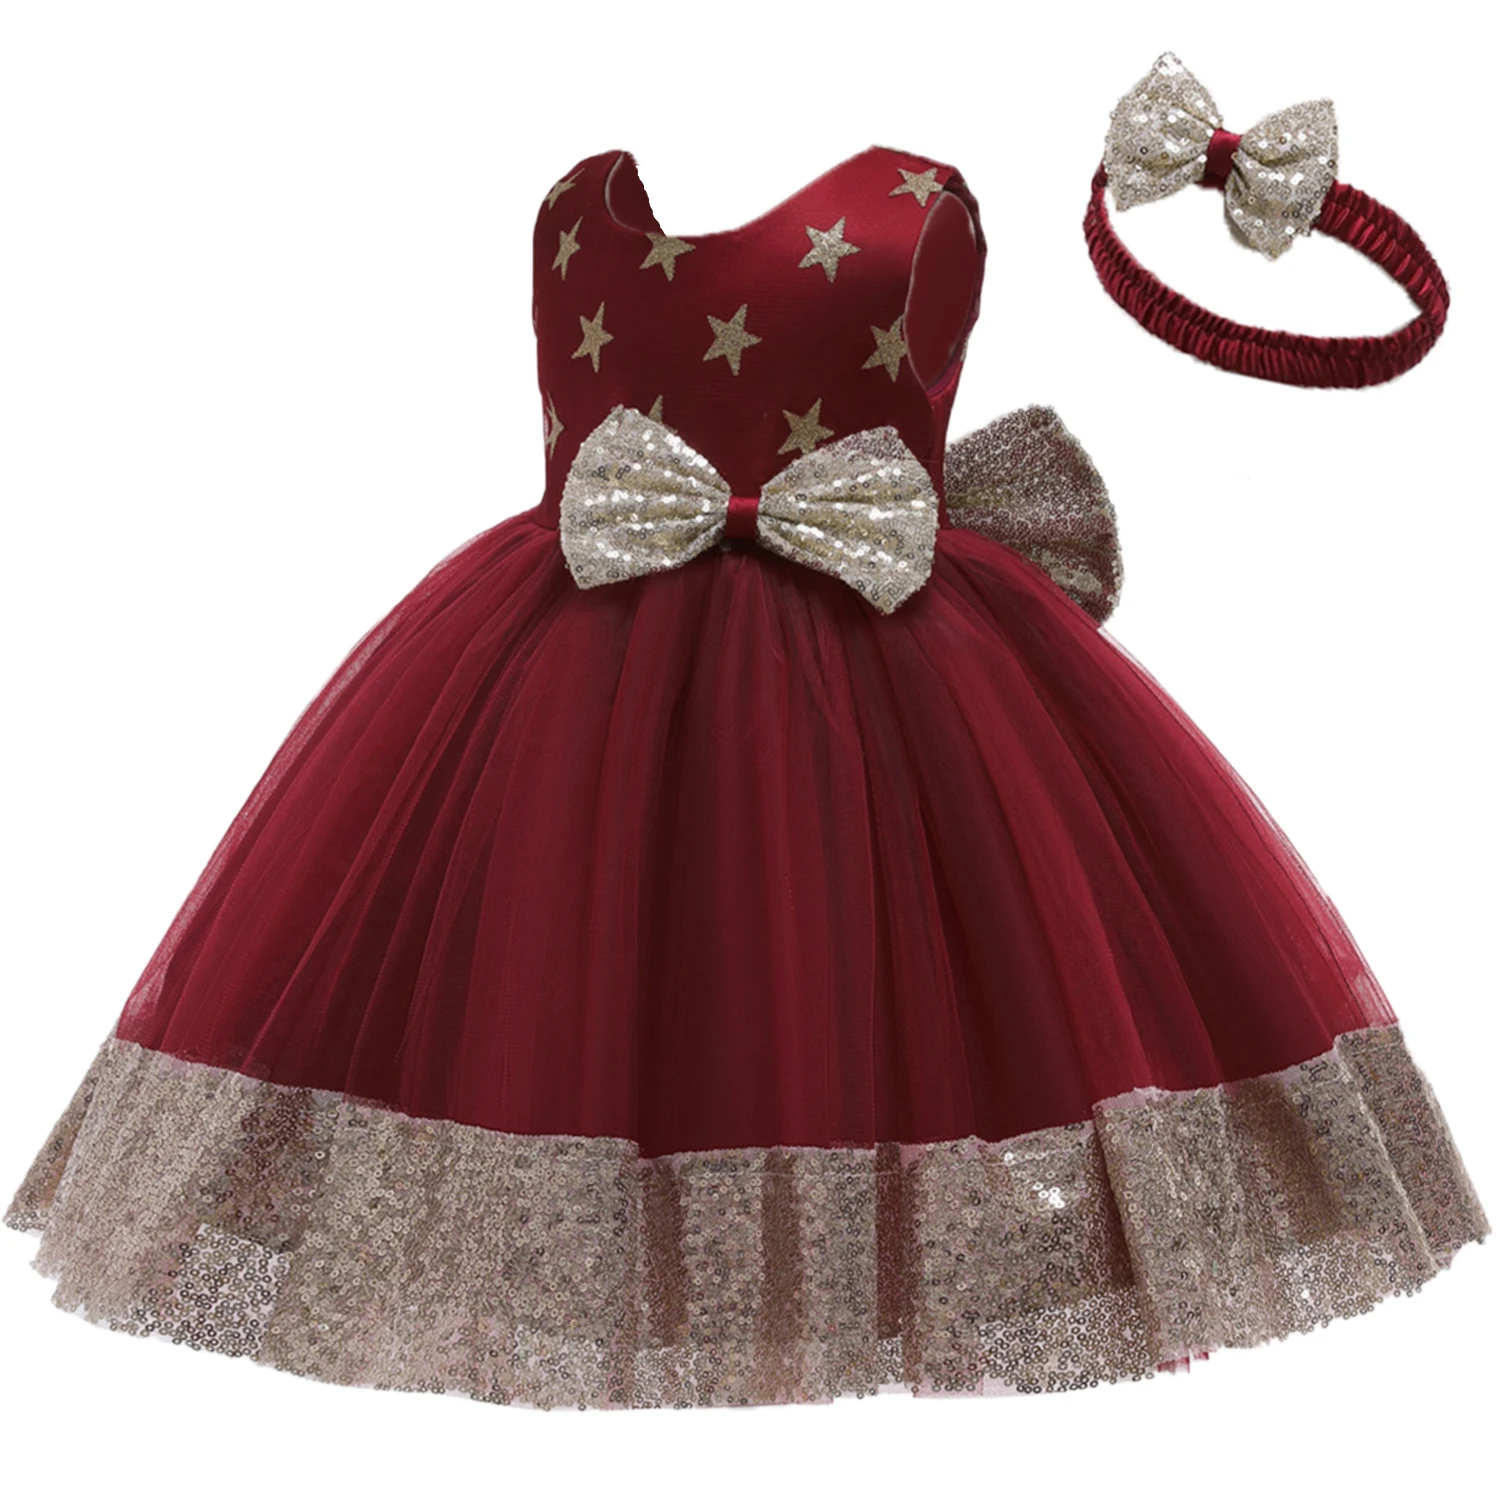 

7837 Kids Dress Models Latest Frock Design Lace Flower Baby Girl party Wear Western Big Bow Dress, Pink, red, champange, black